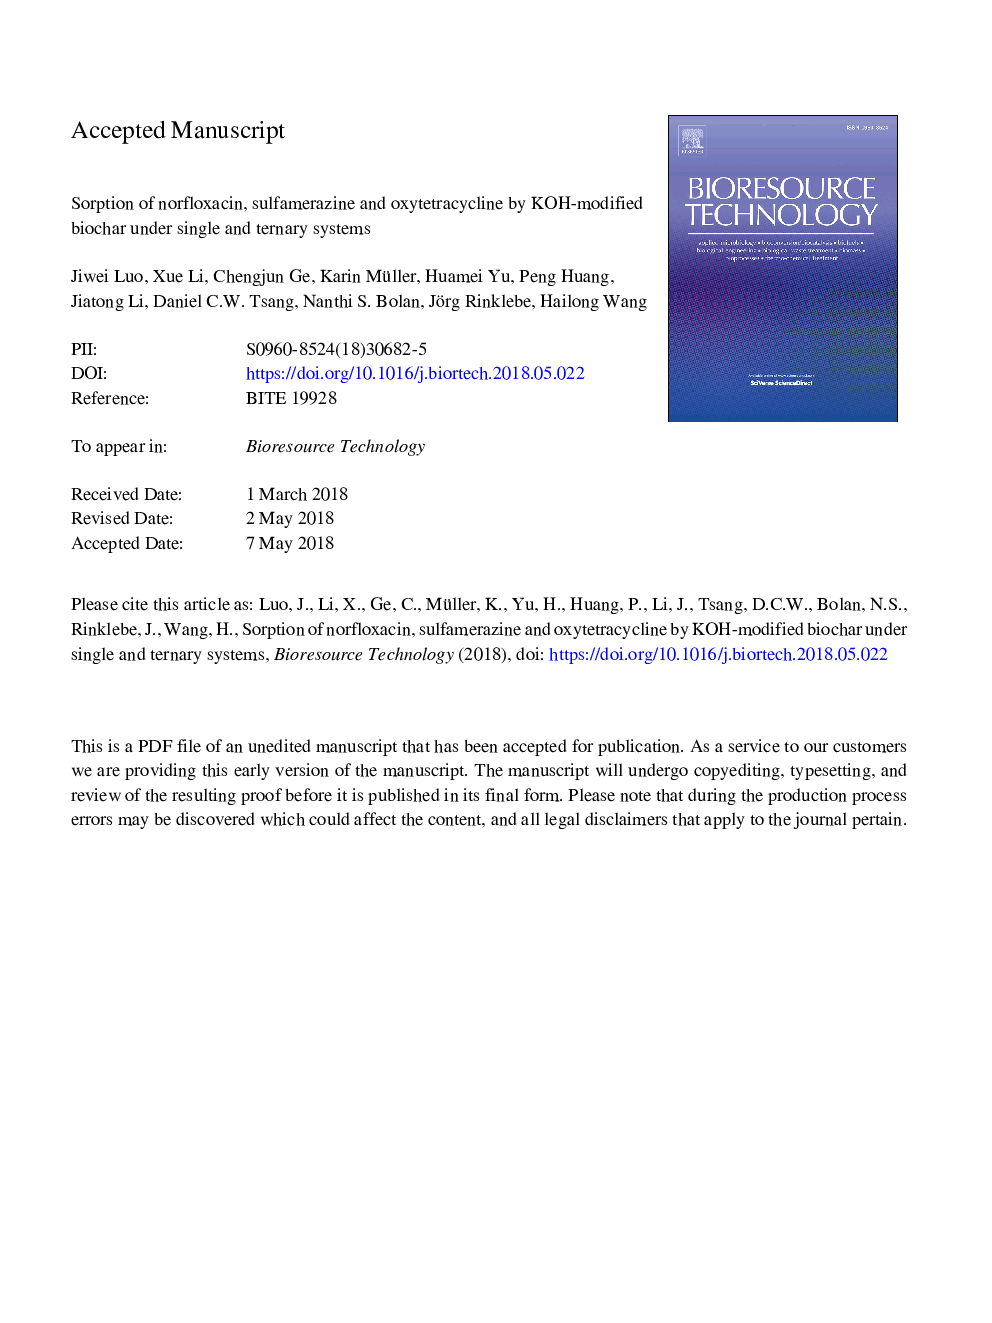 Sorption of norfloxacin, sulfamerazine and oxytetracycline by KOH-modified biochar under single and ternary systems